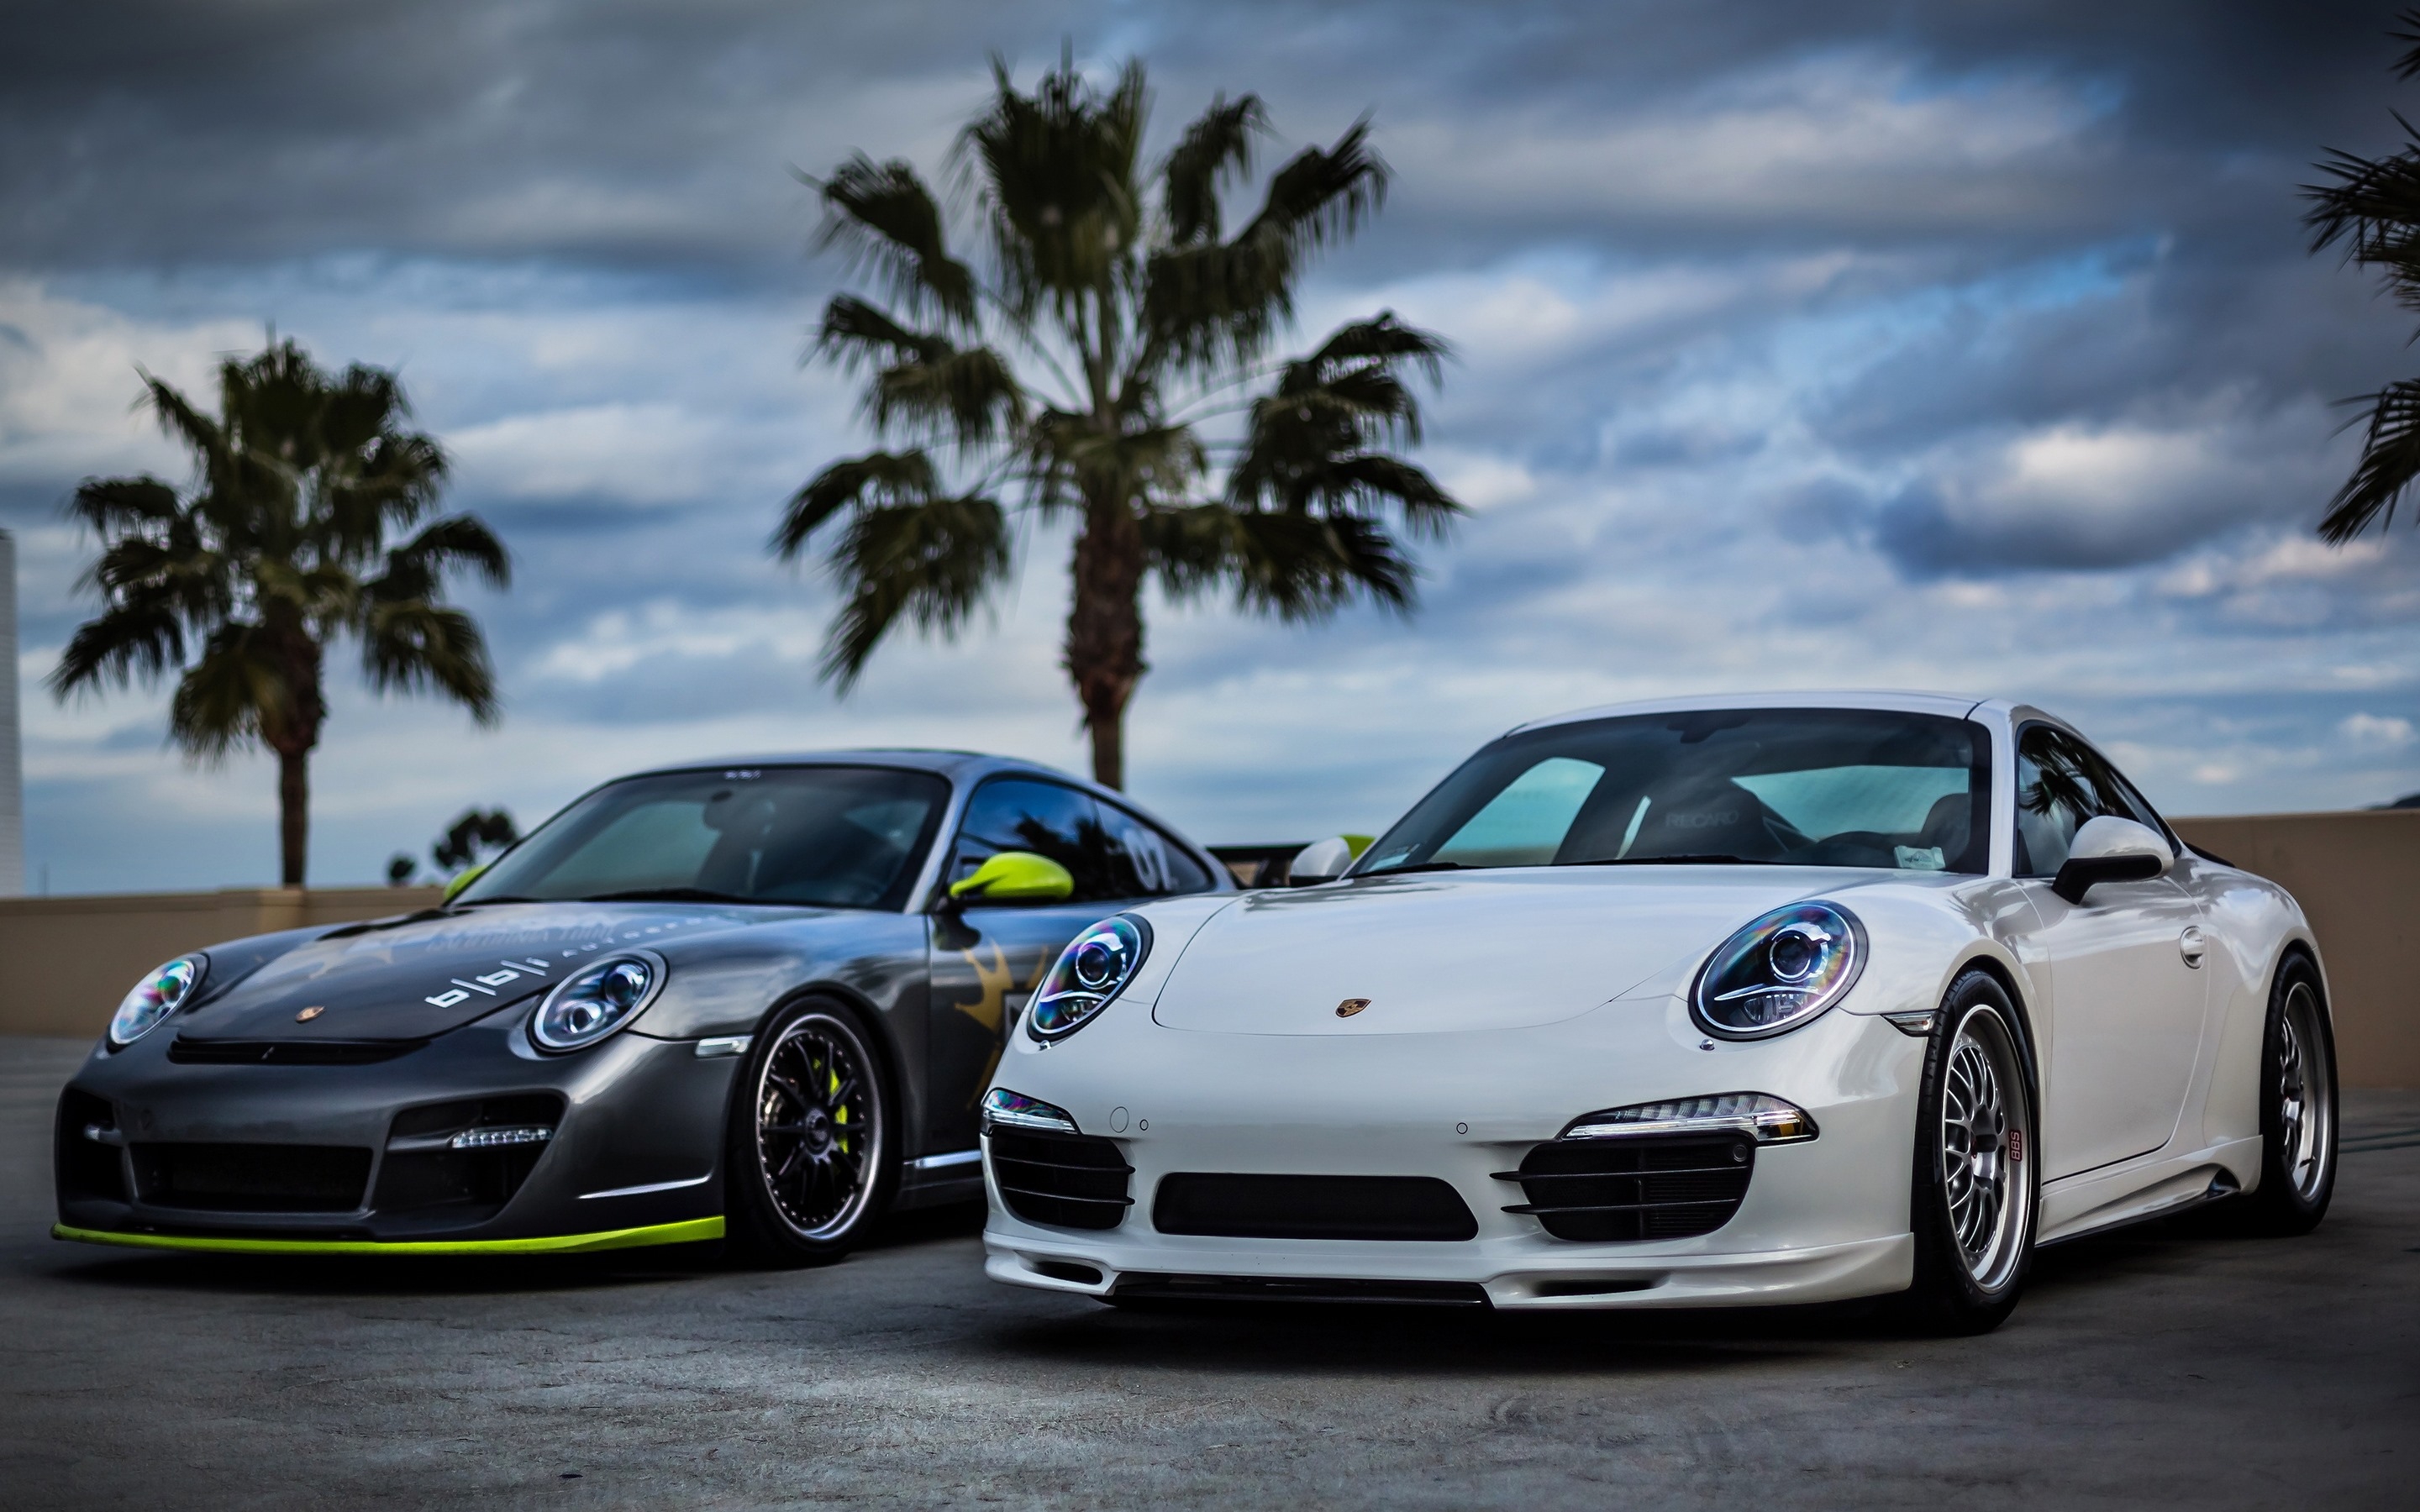 White and black Porsche sports near palm trees